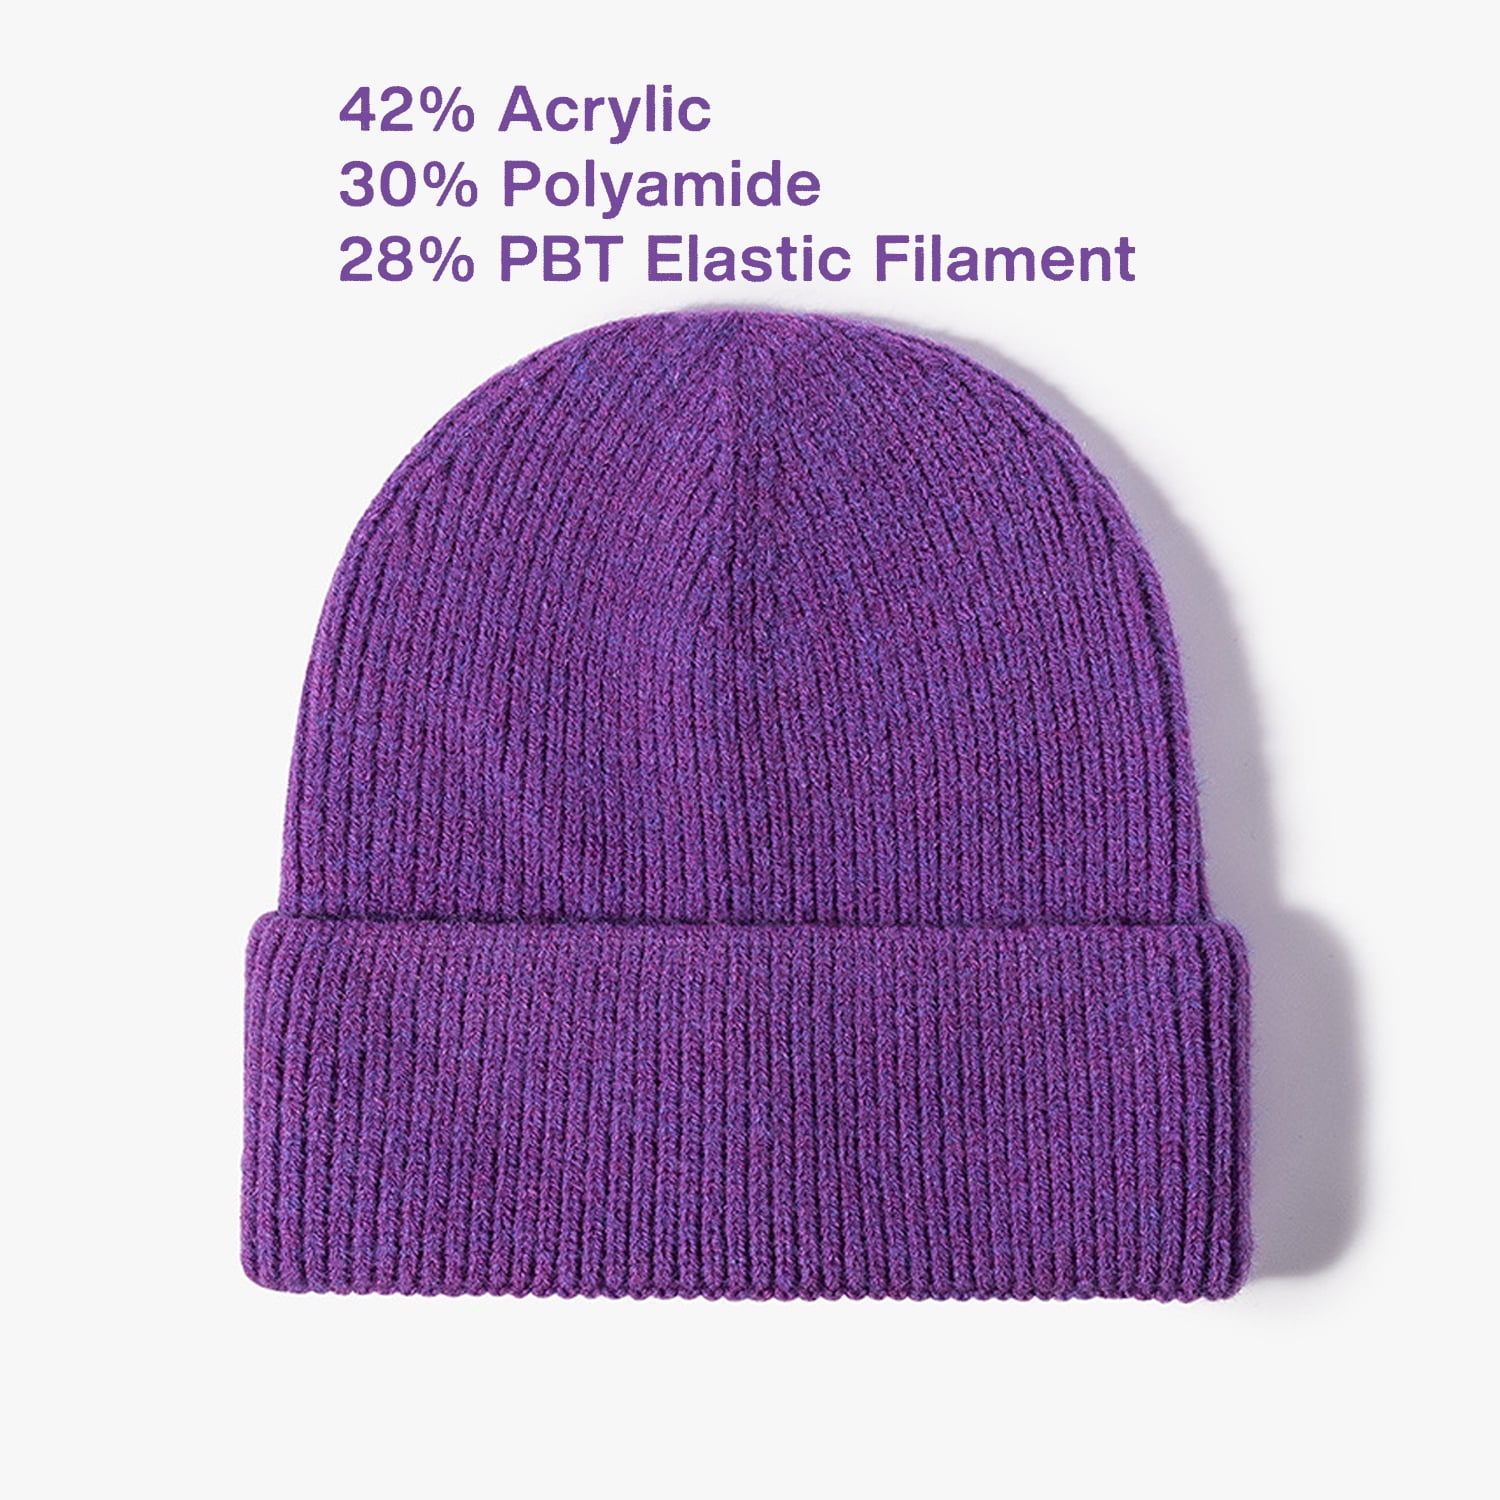 Flexible Purple Beanie Pattern Petal Women Hat Men - Flat Winter Skull Cap Cuffed Smooth Head Everyday Cool Accessory Unisex and Use